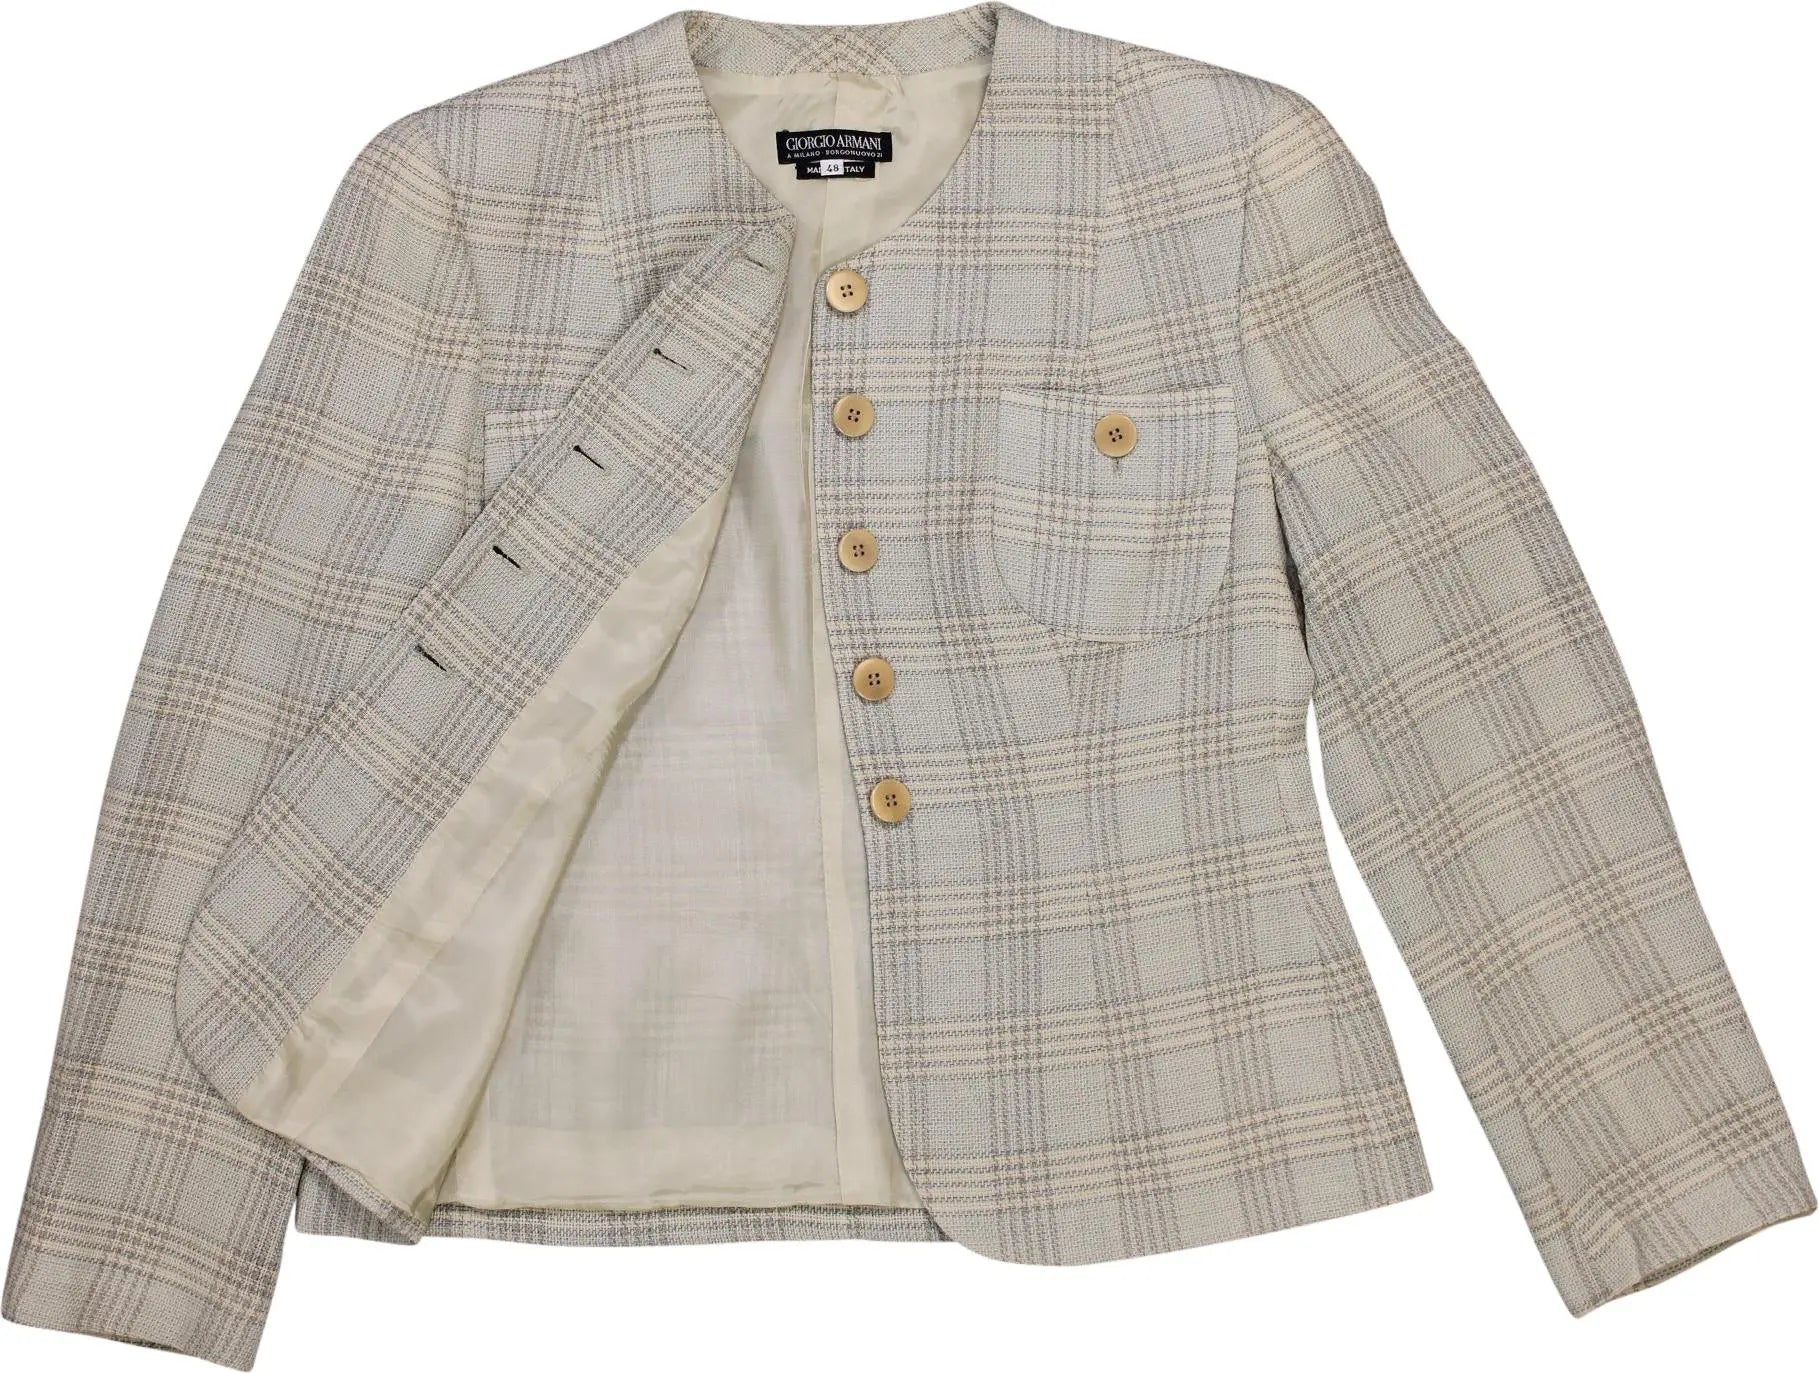 Giorgio Armani - Checked Woven Blazer by Giorgio Armani- ThriftTale.com - Vintage and second handclothing